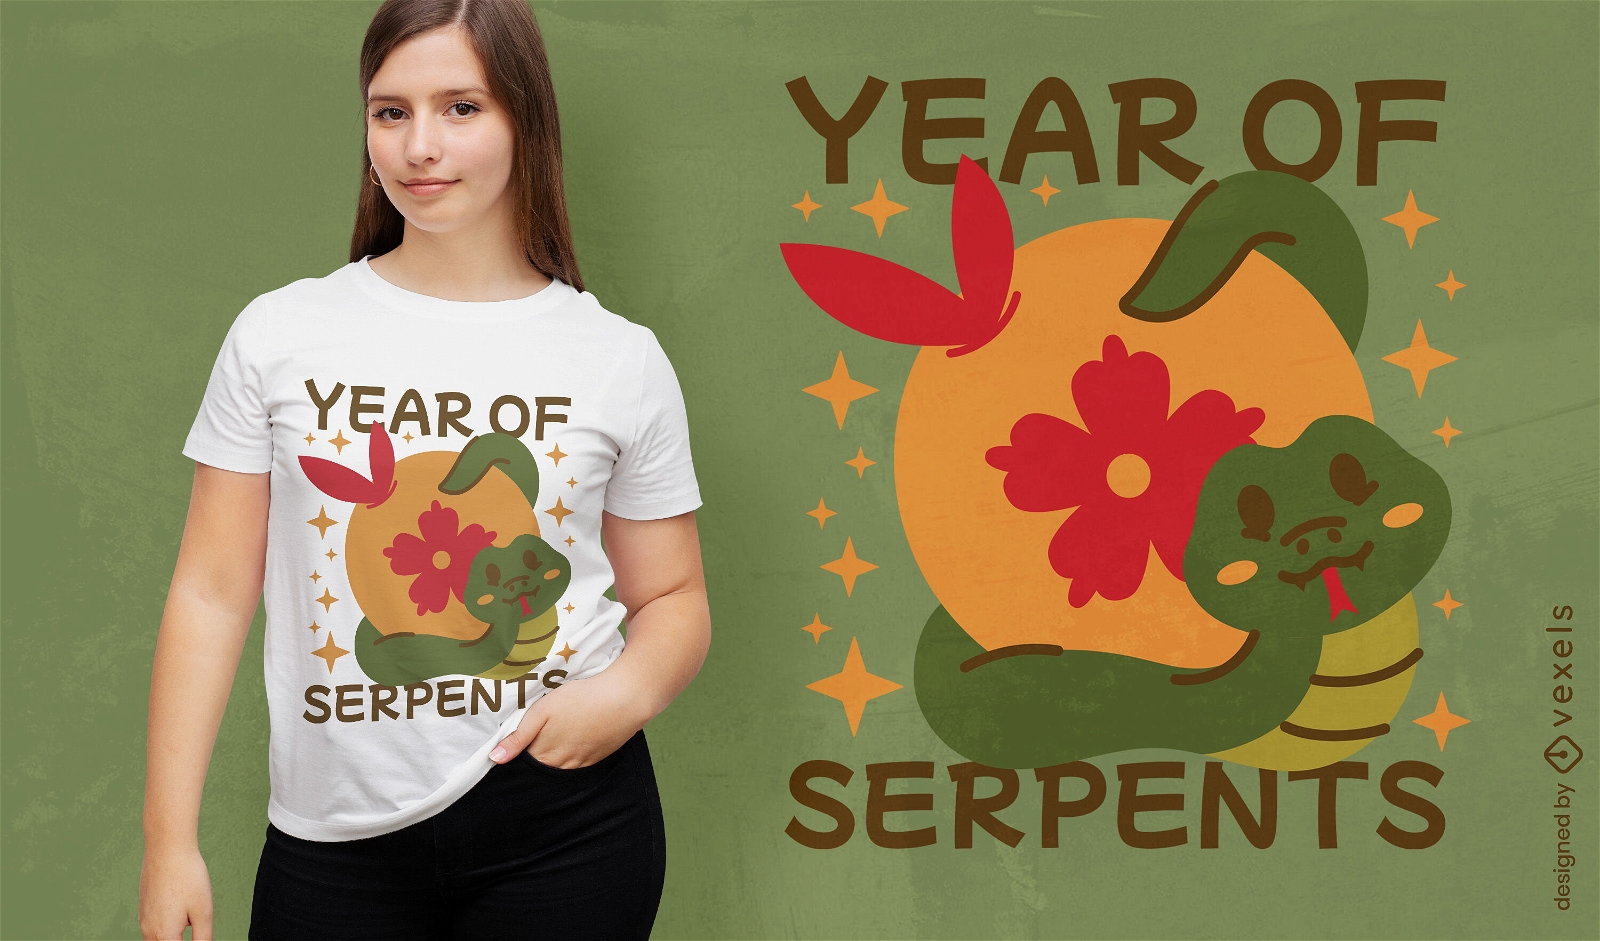 Year of serpents t-shirt design